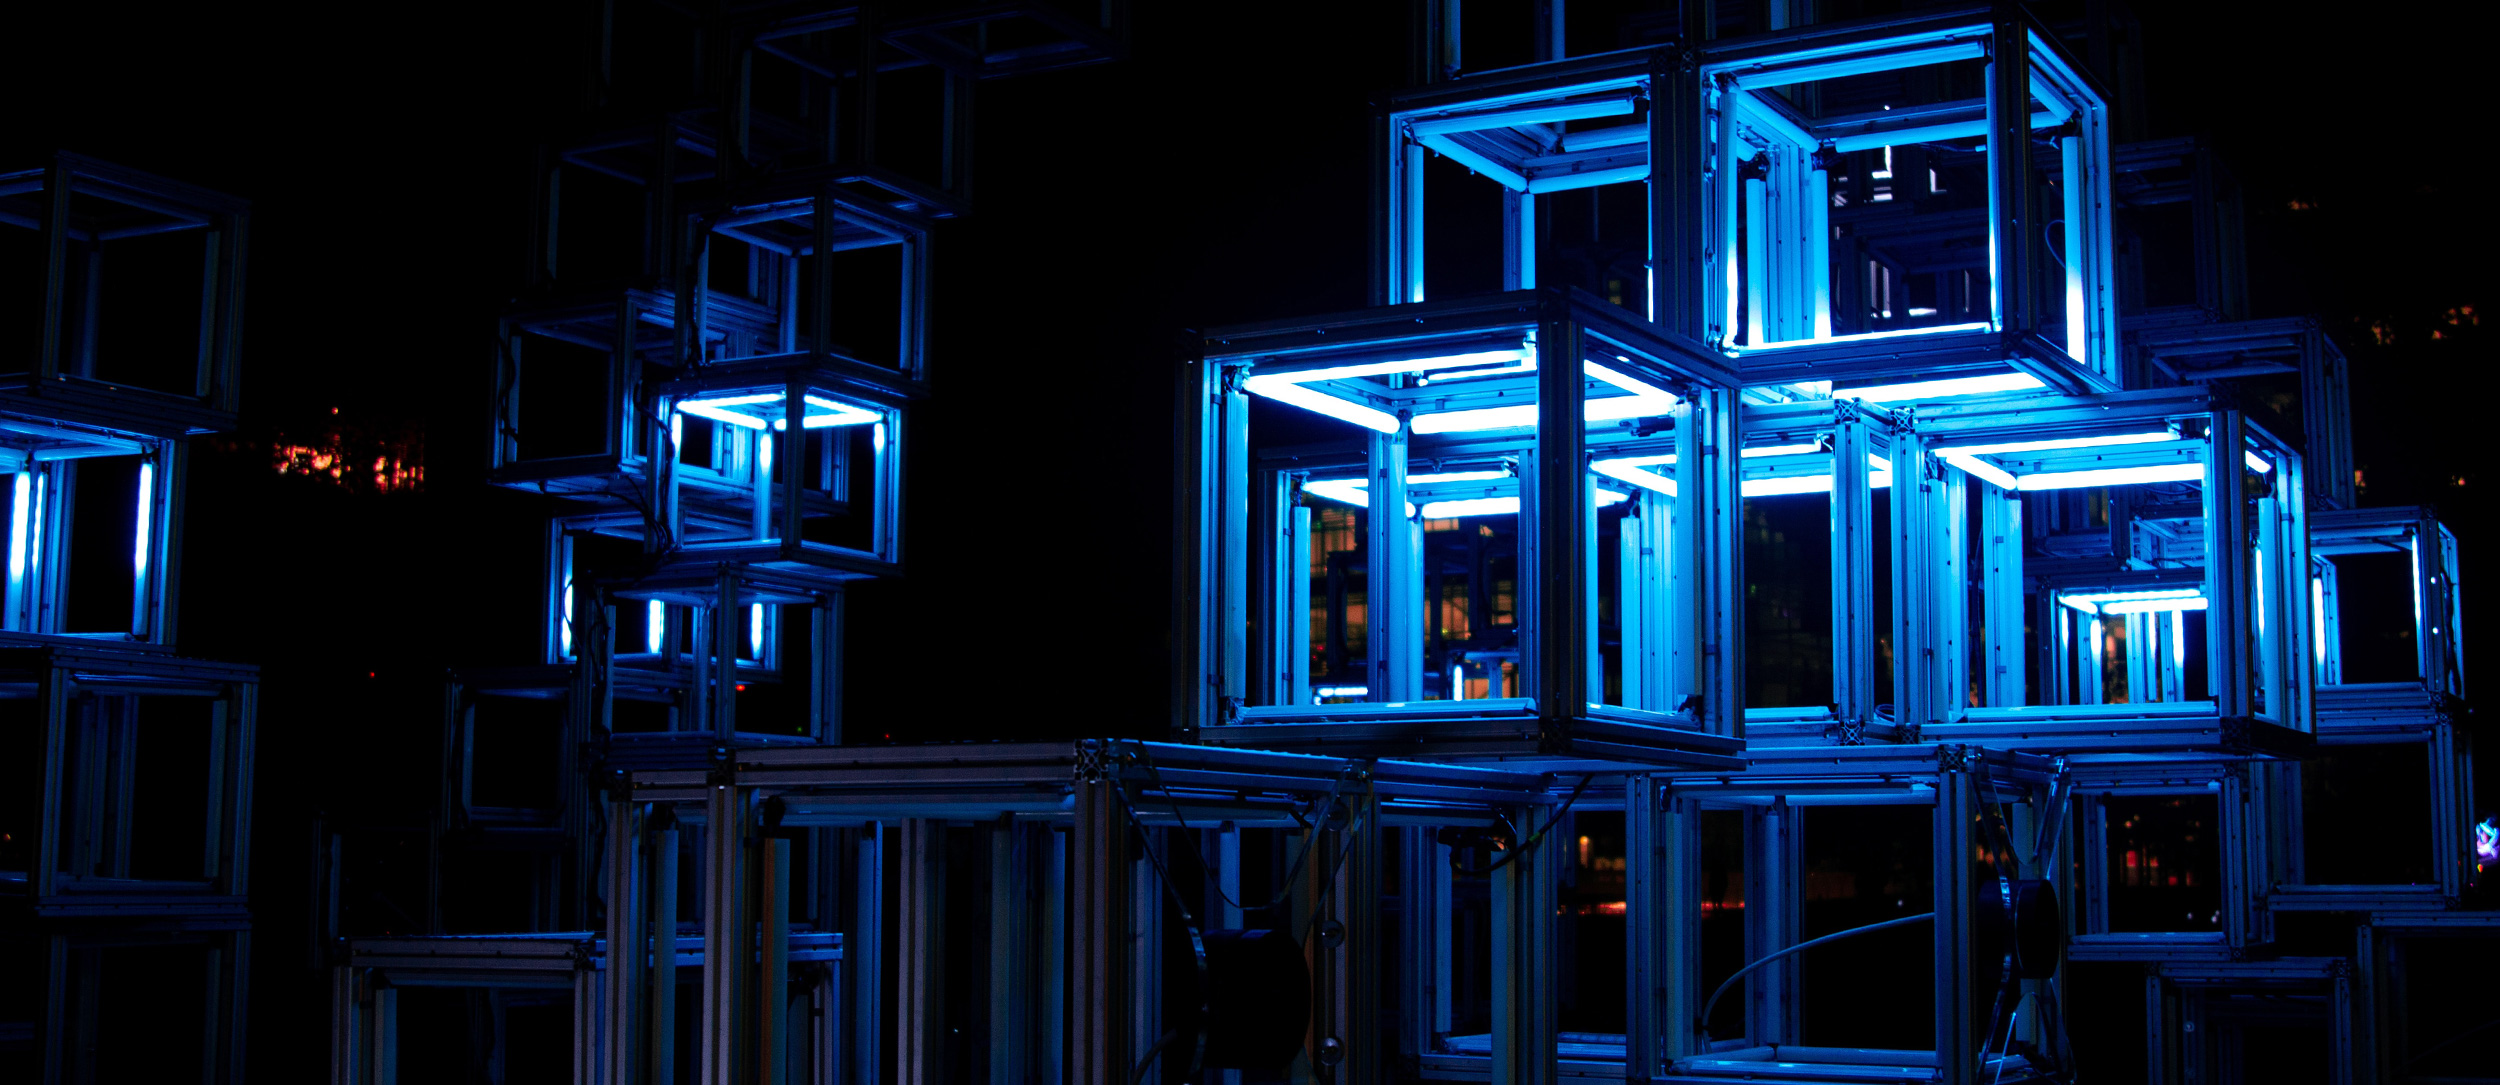 Art installation cubes